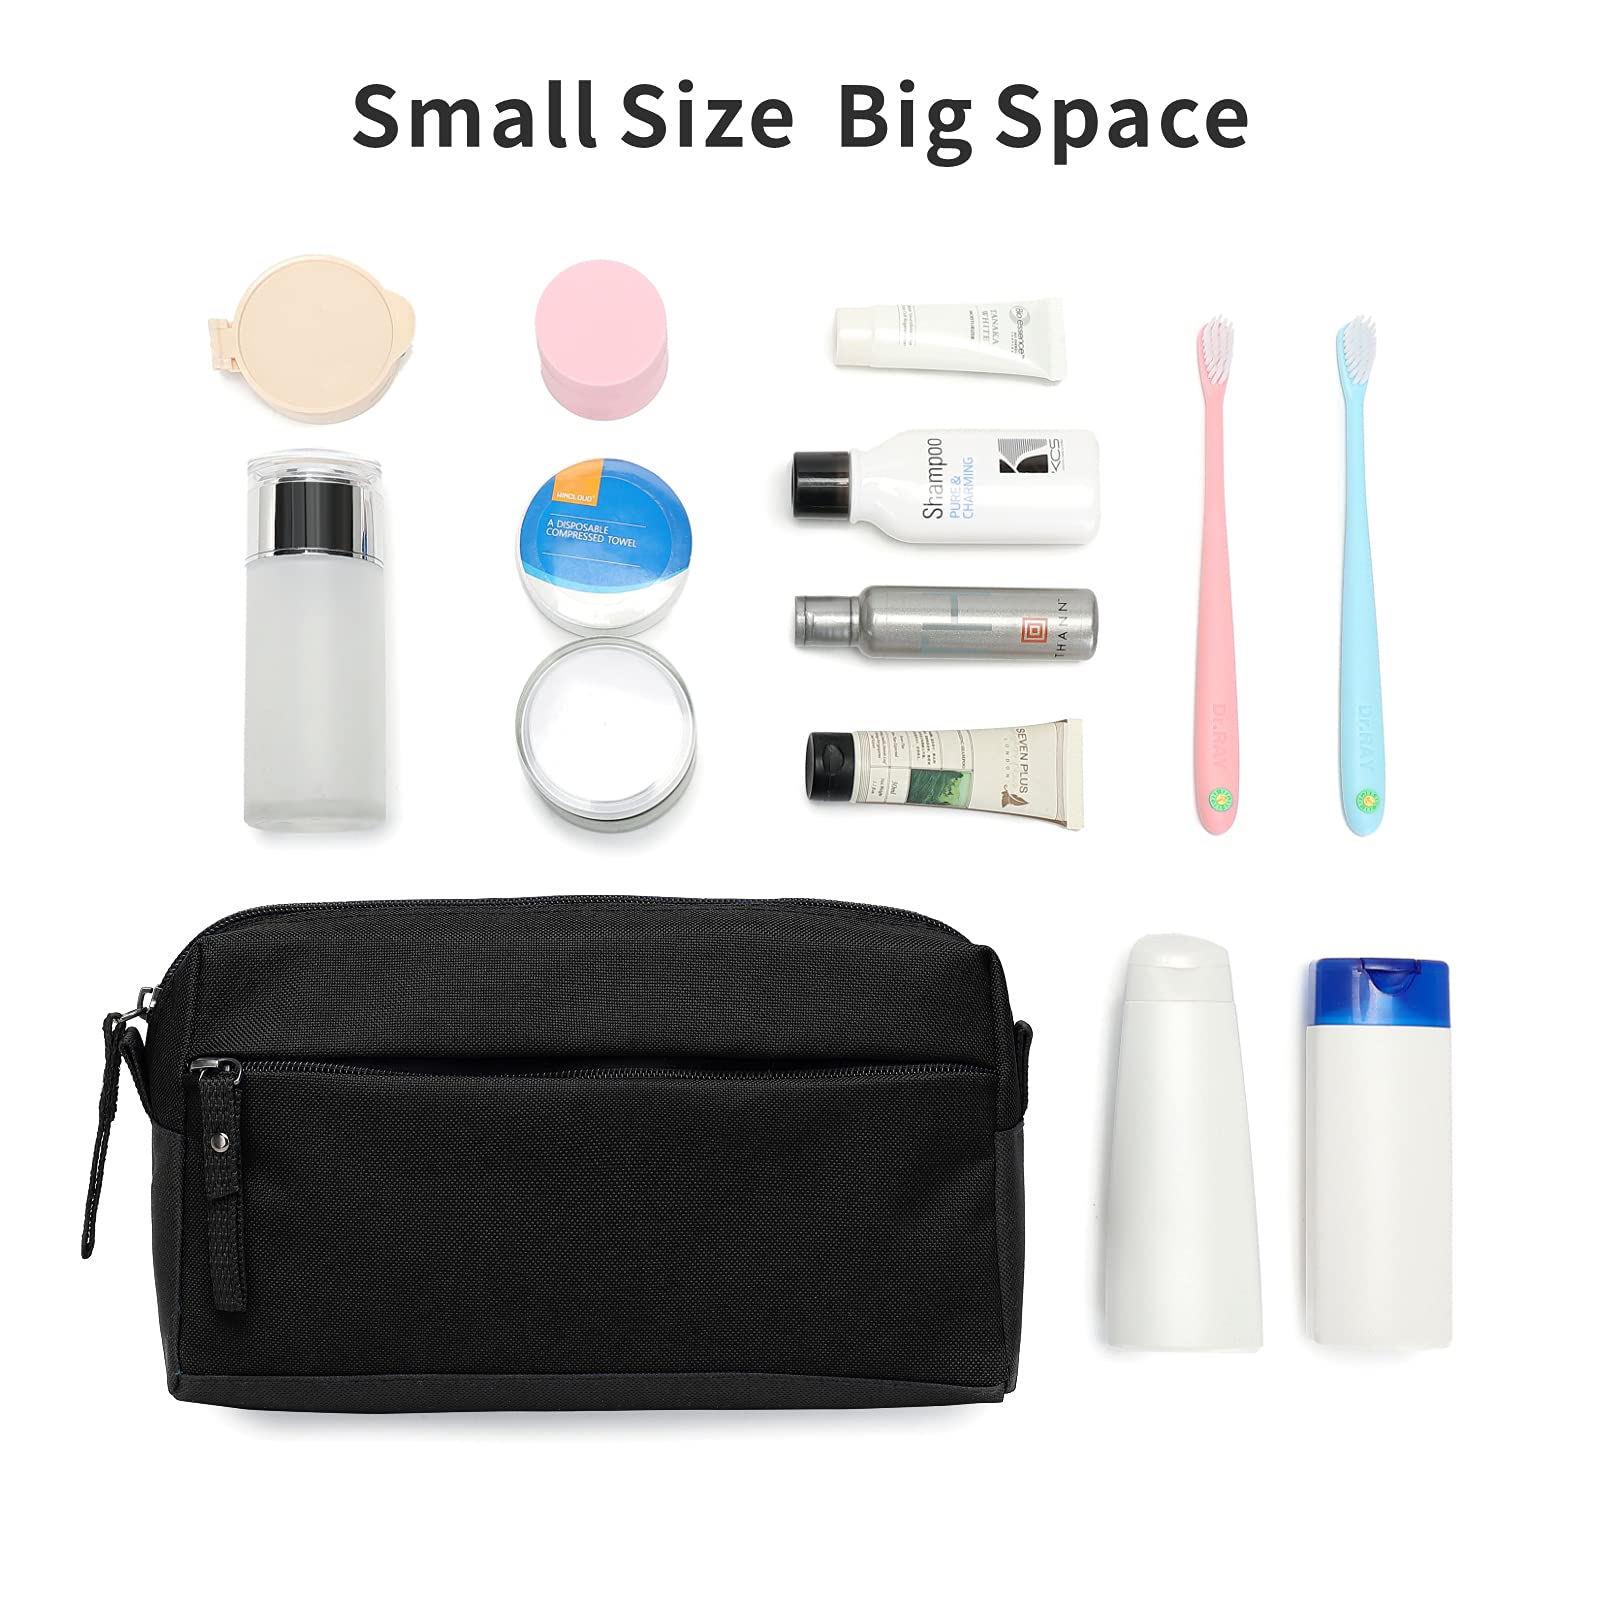 BuyAgain Toiletry Bag, Toiletry Travel Bathroom Bag Waterproof Cosmetic Make up Pouch Dopp Kit For Men or Women, Black